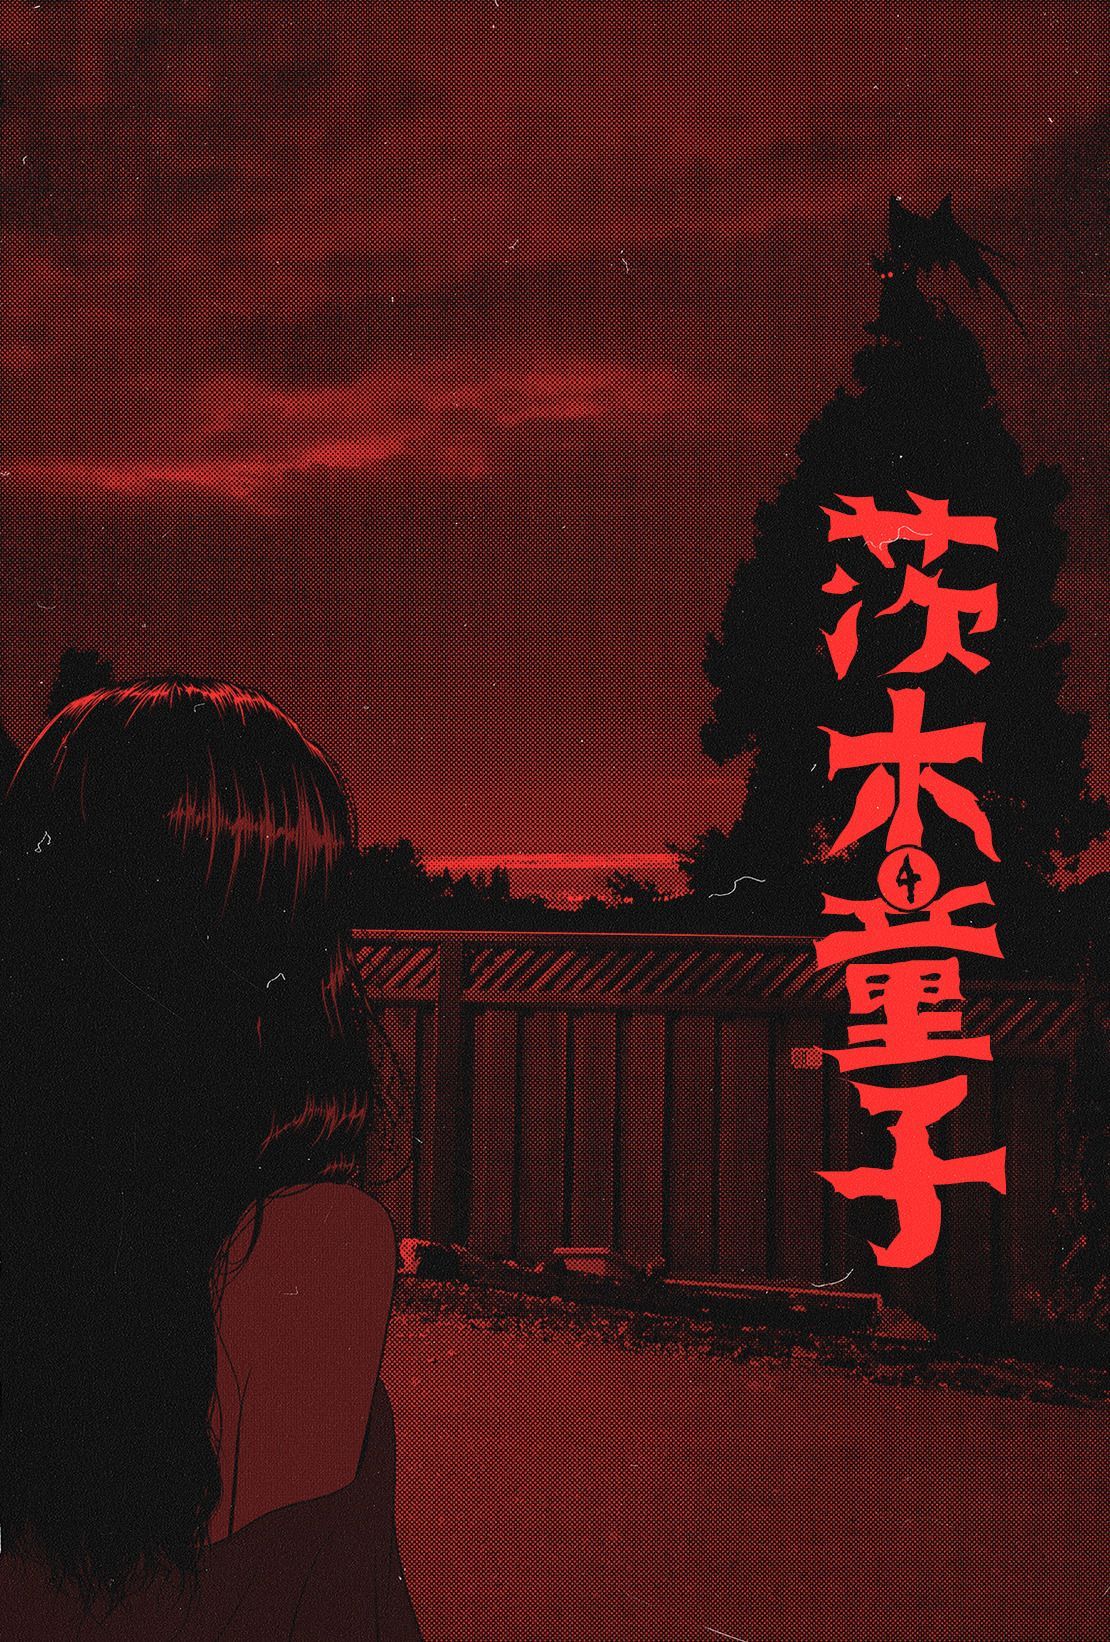 NISHIO. Aesthetic anime, Anime wallpaper iphone, Red aesthetic grunge